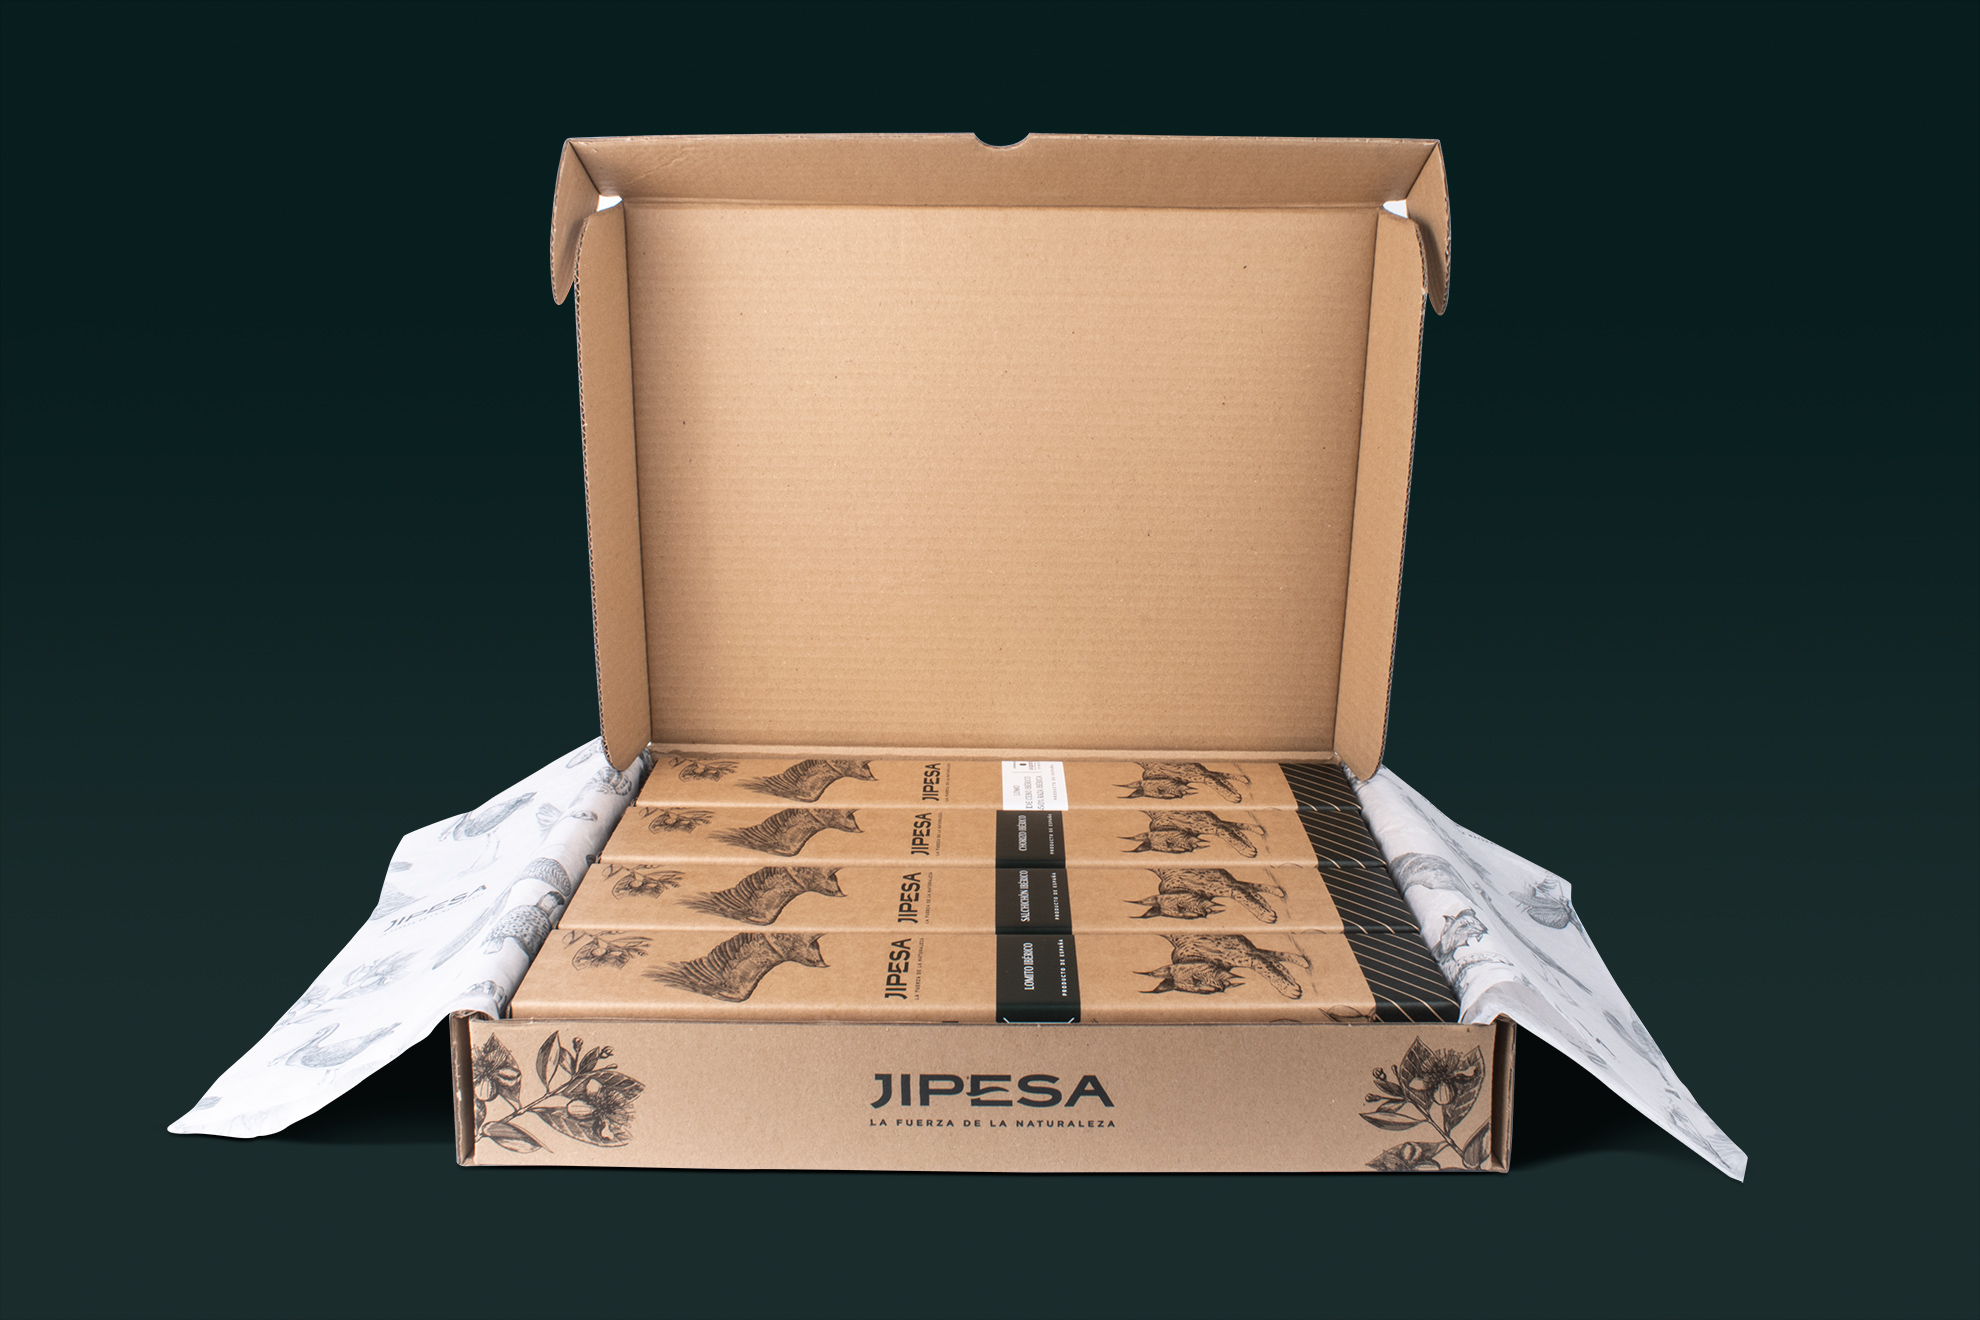 Jipesa packaging sostenible para jamon